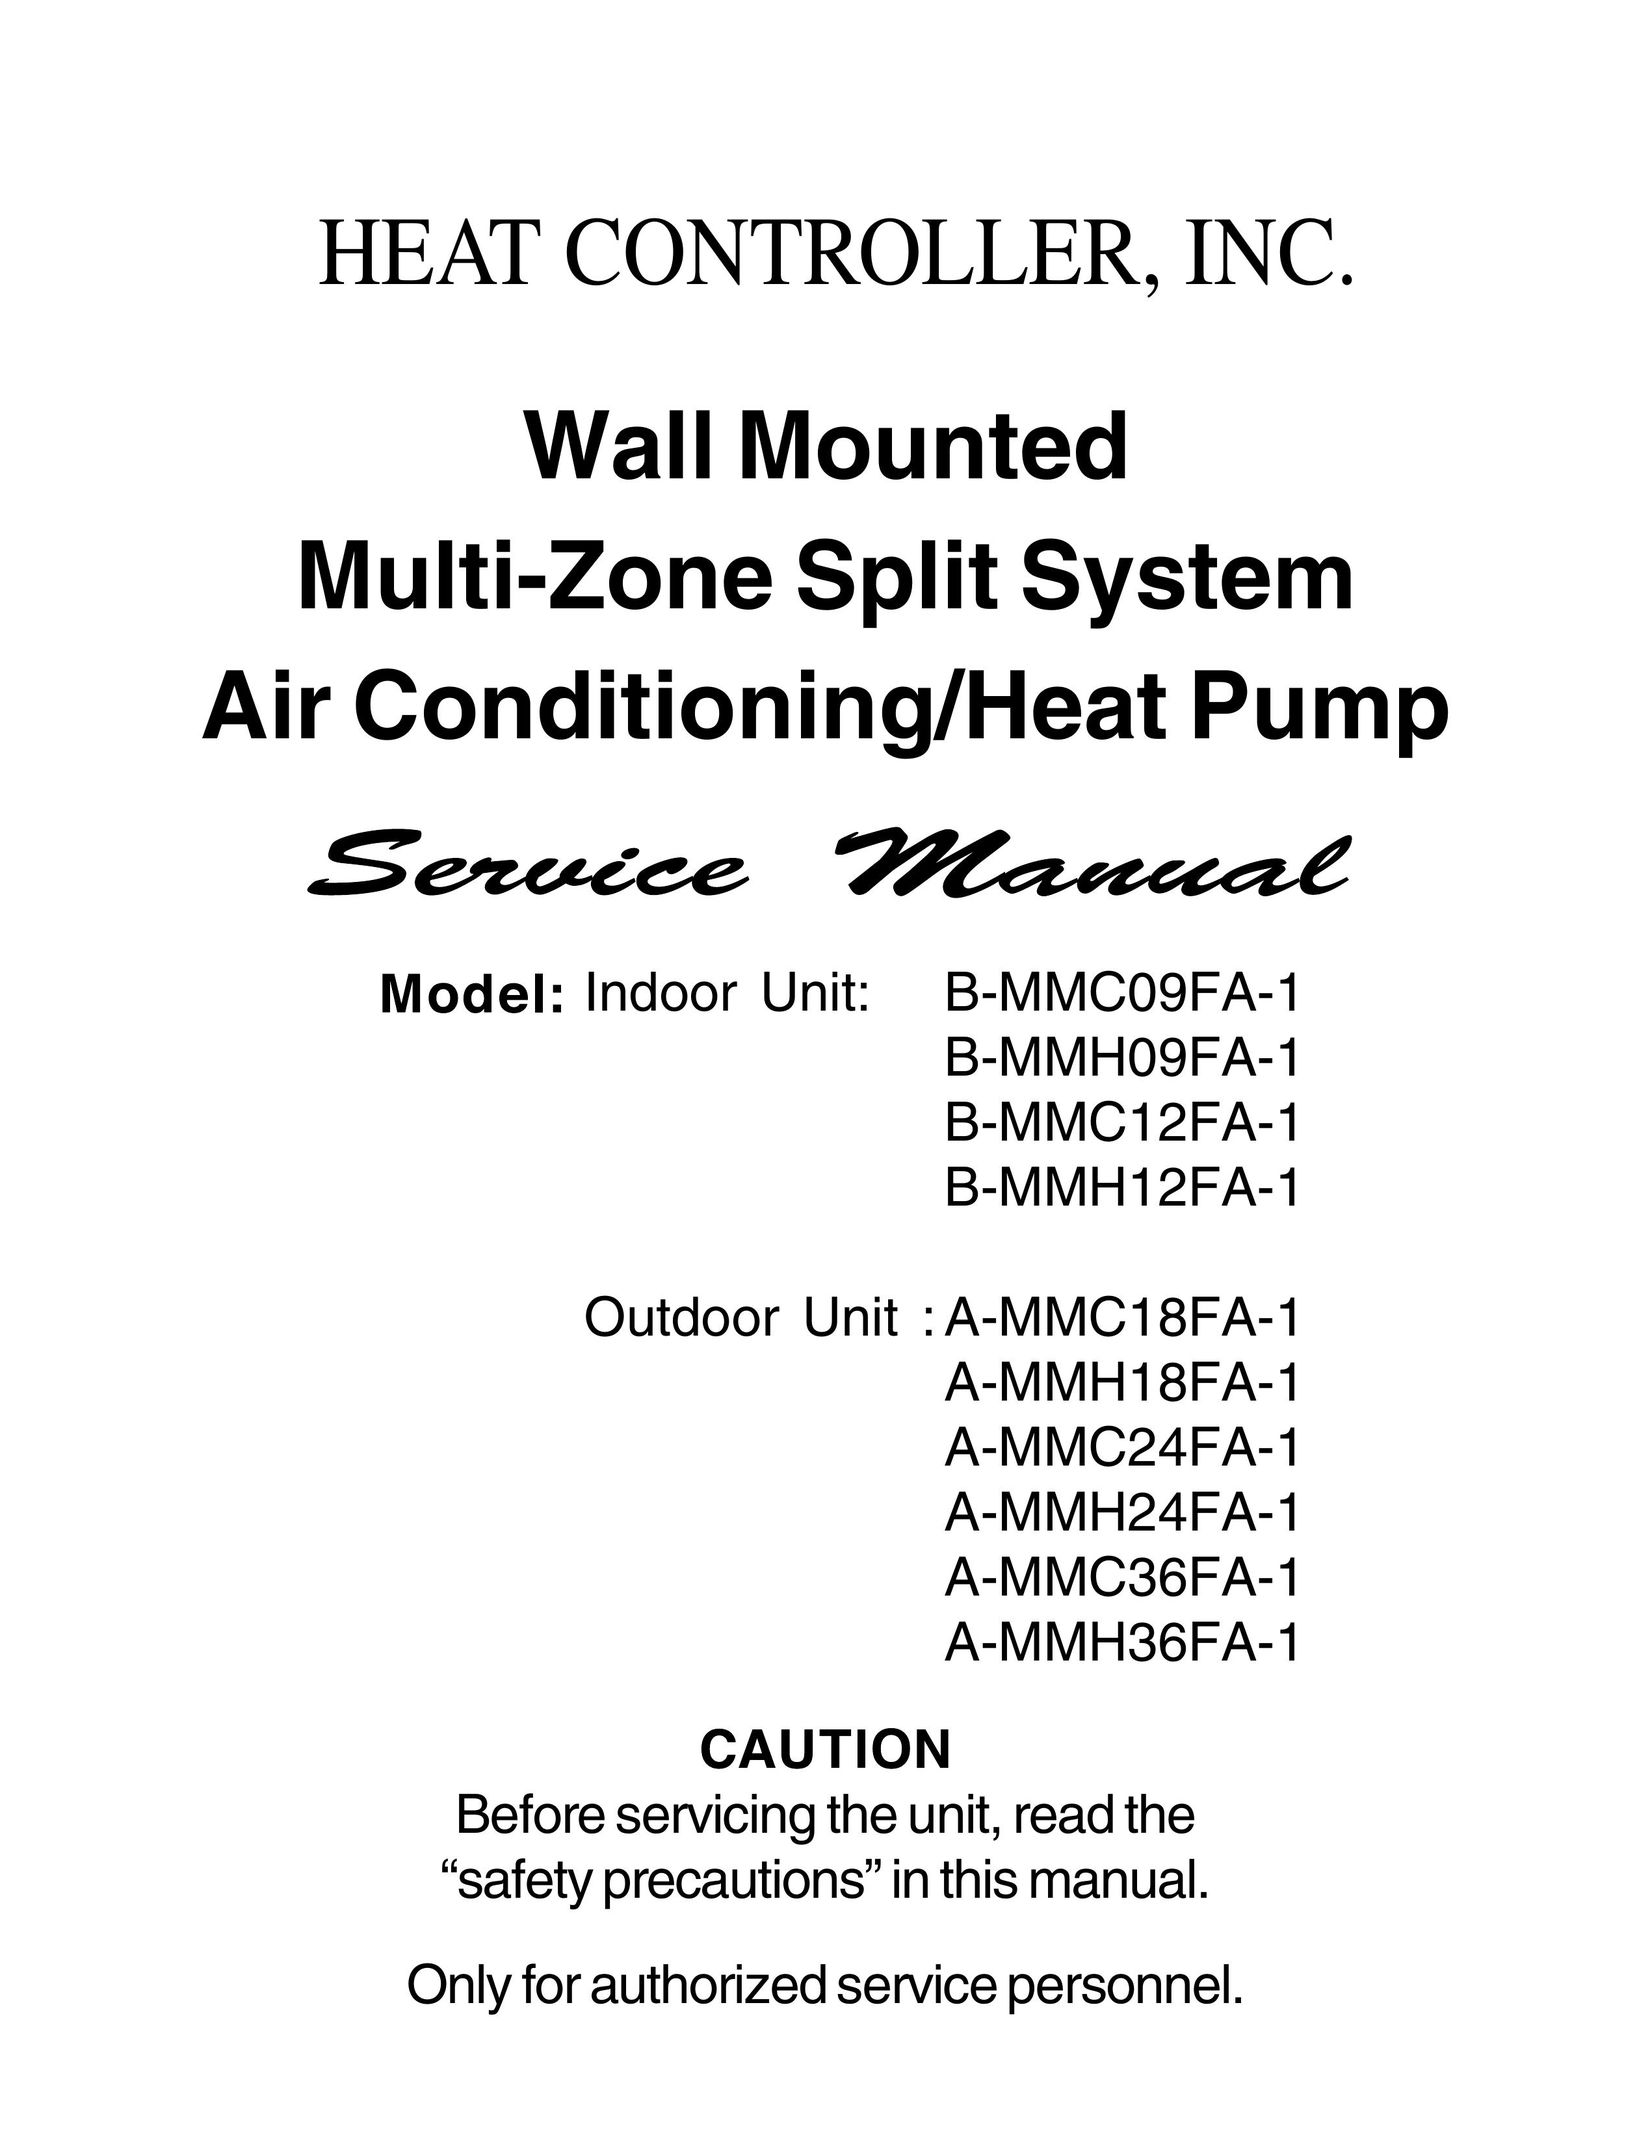 Heat Controller A-MMC24FA-1 Air Conditioner User Manual